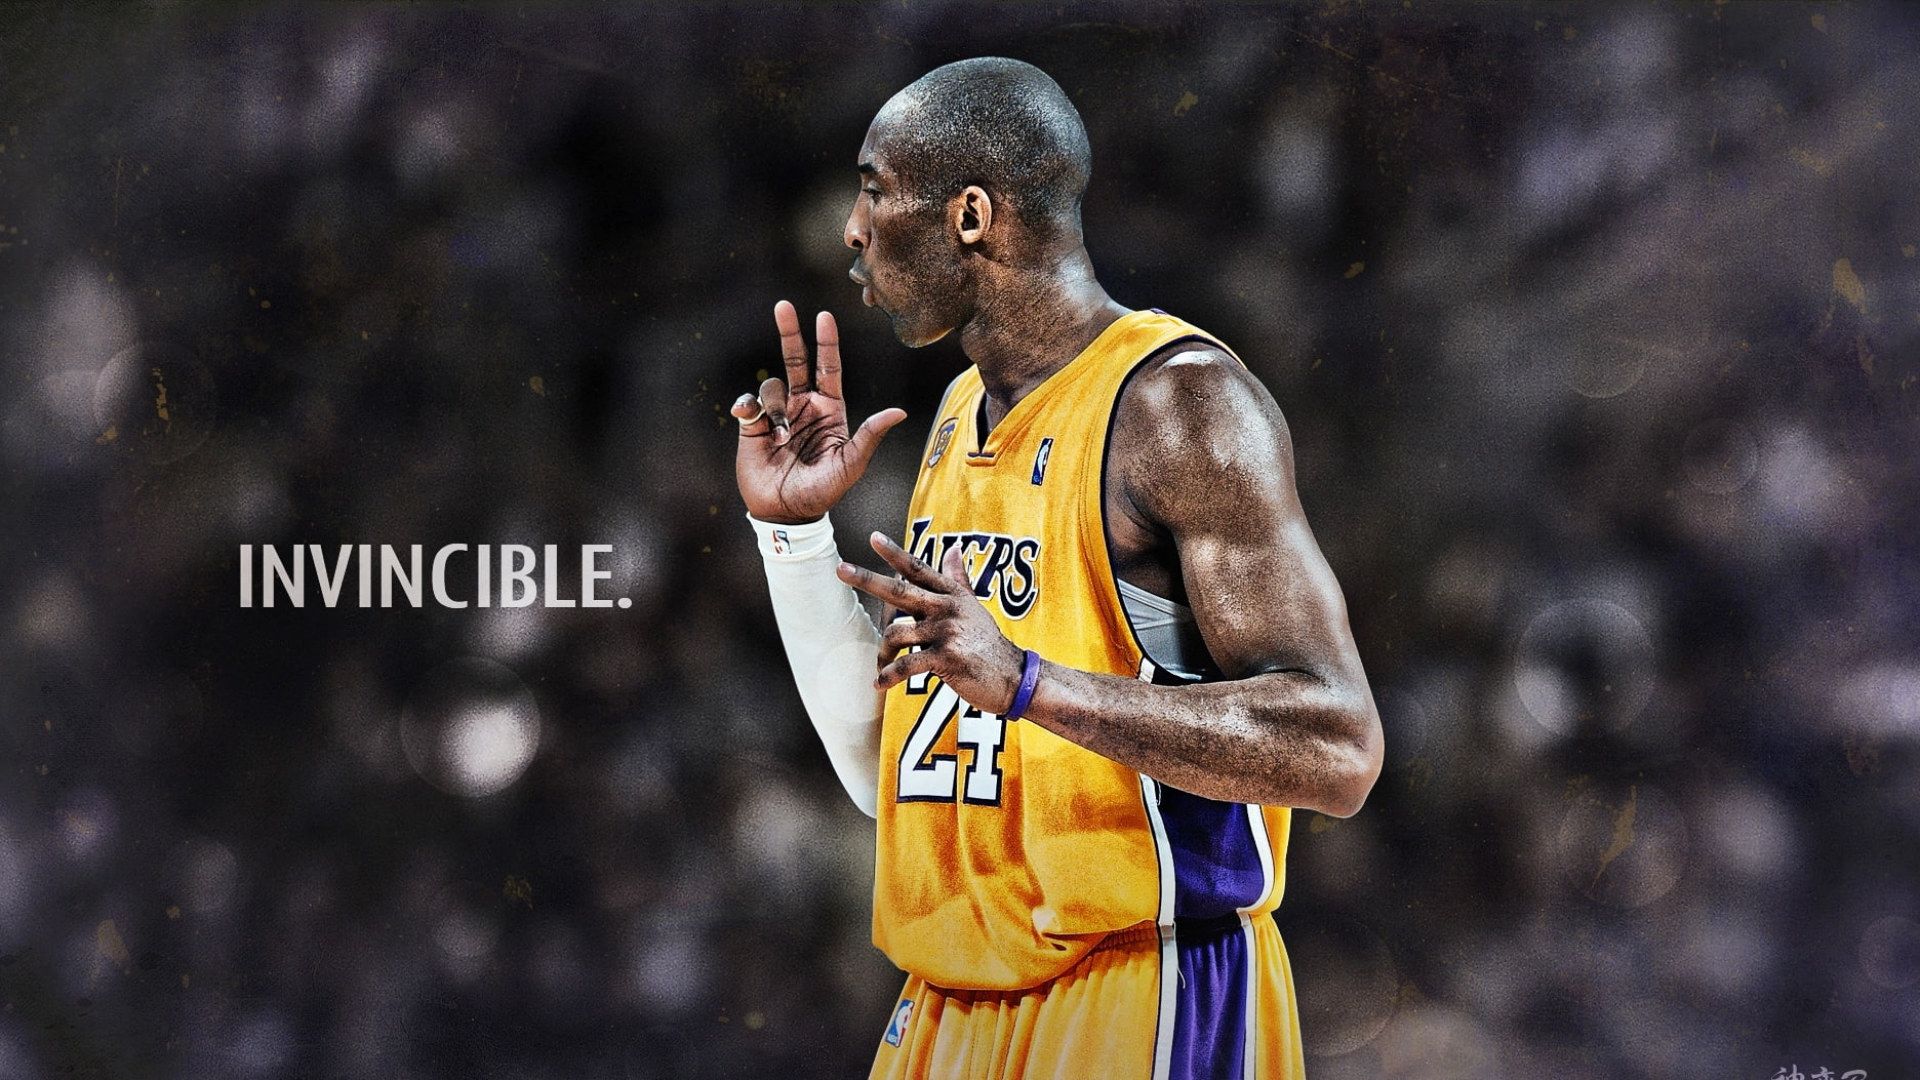 Kobe Bryant Invincible HD Wallpaper, Kobe Bryant, Sports, Basketball • Wallpaper For You HD Wallpaper For Desktop & Mobile